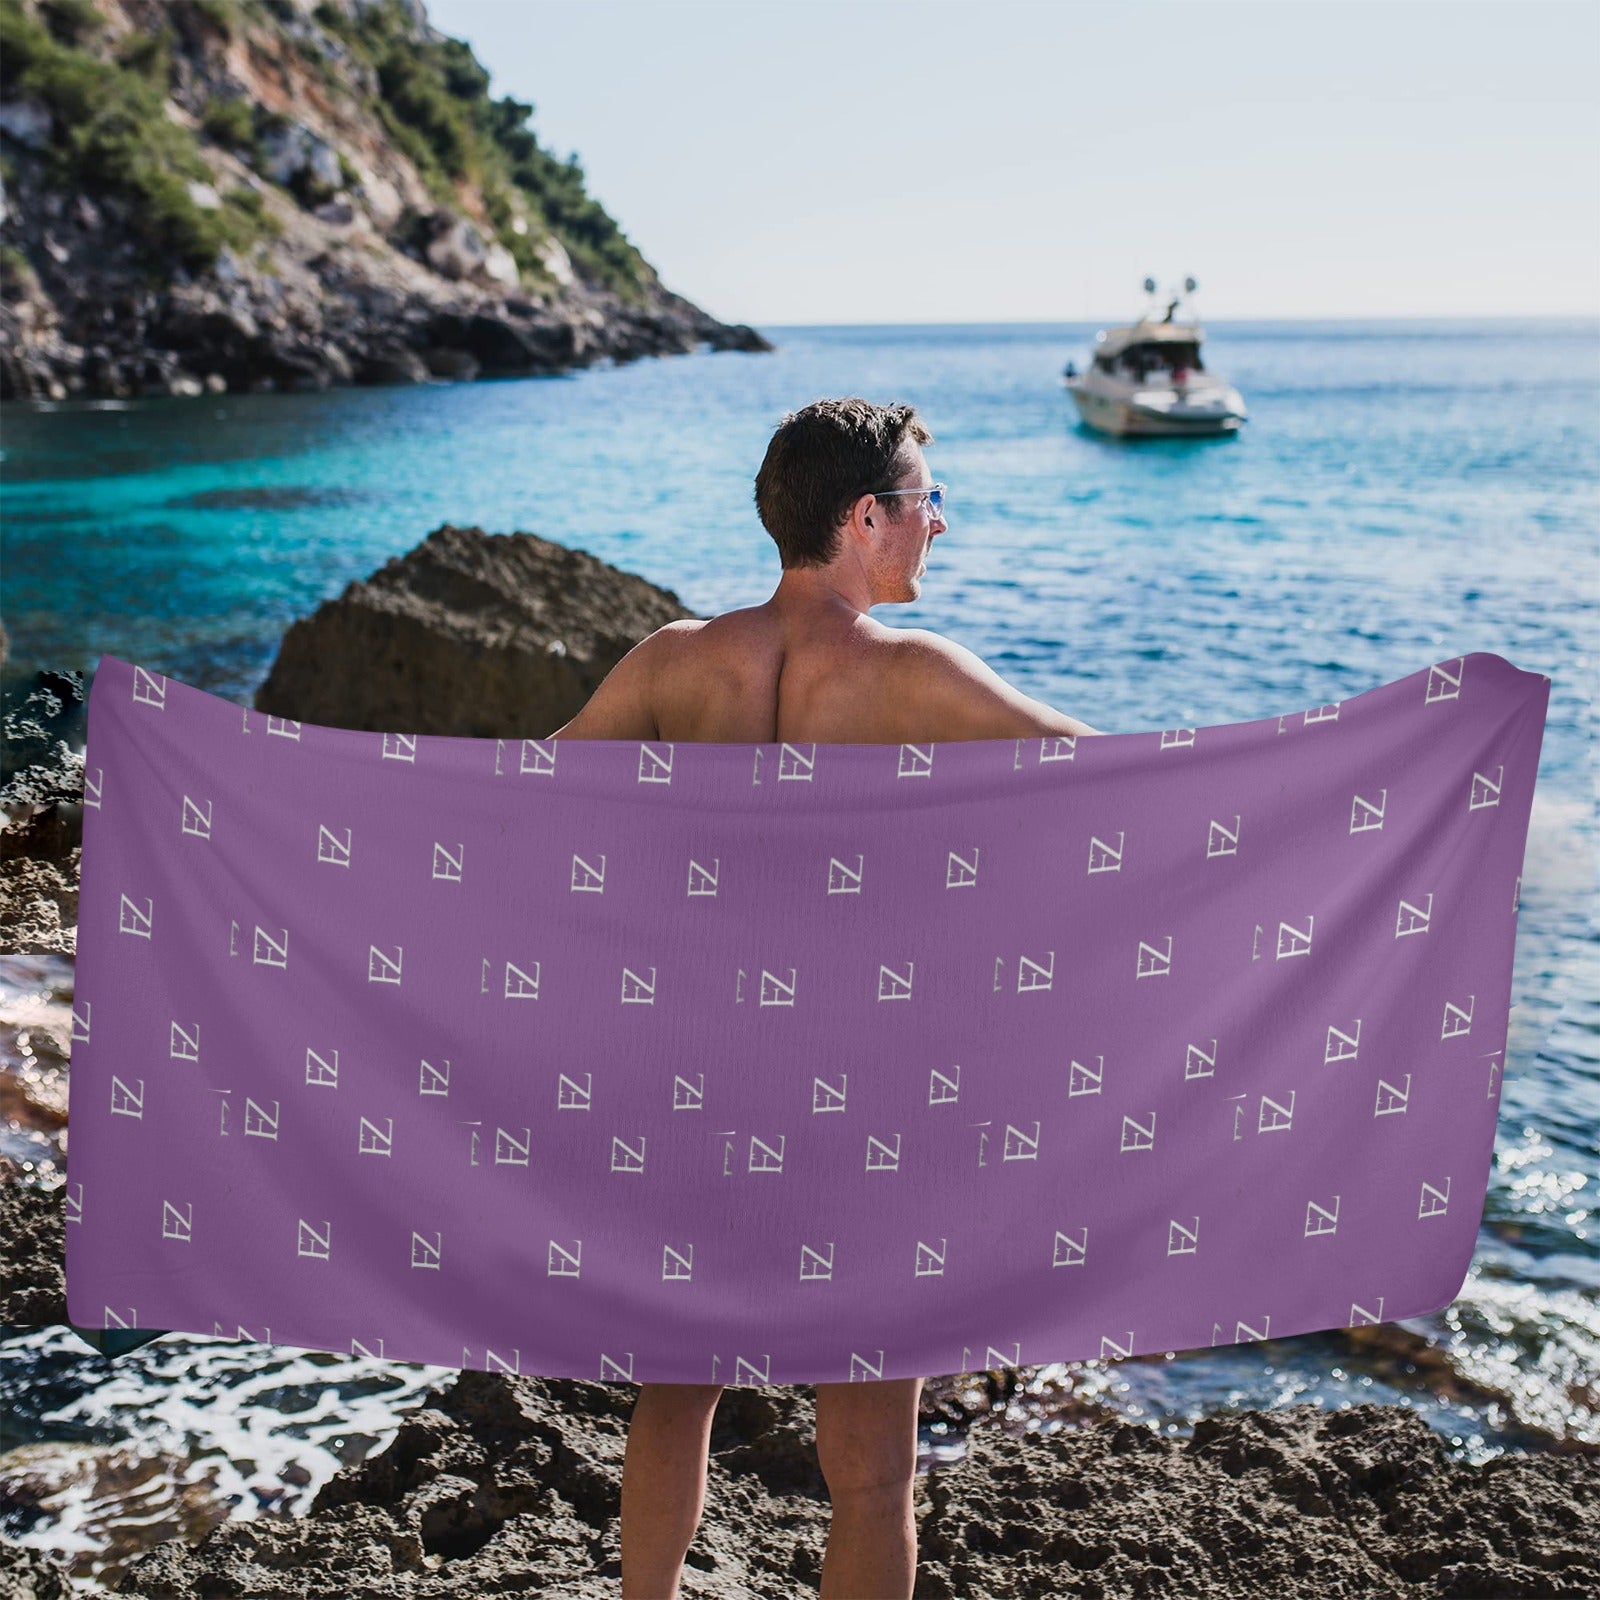 fz towel - purple beach towel 31"x71"(new)( made in queen)